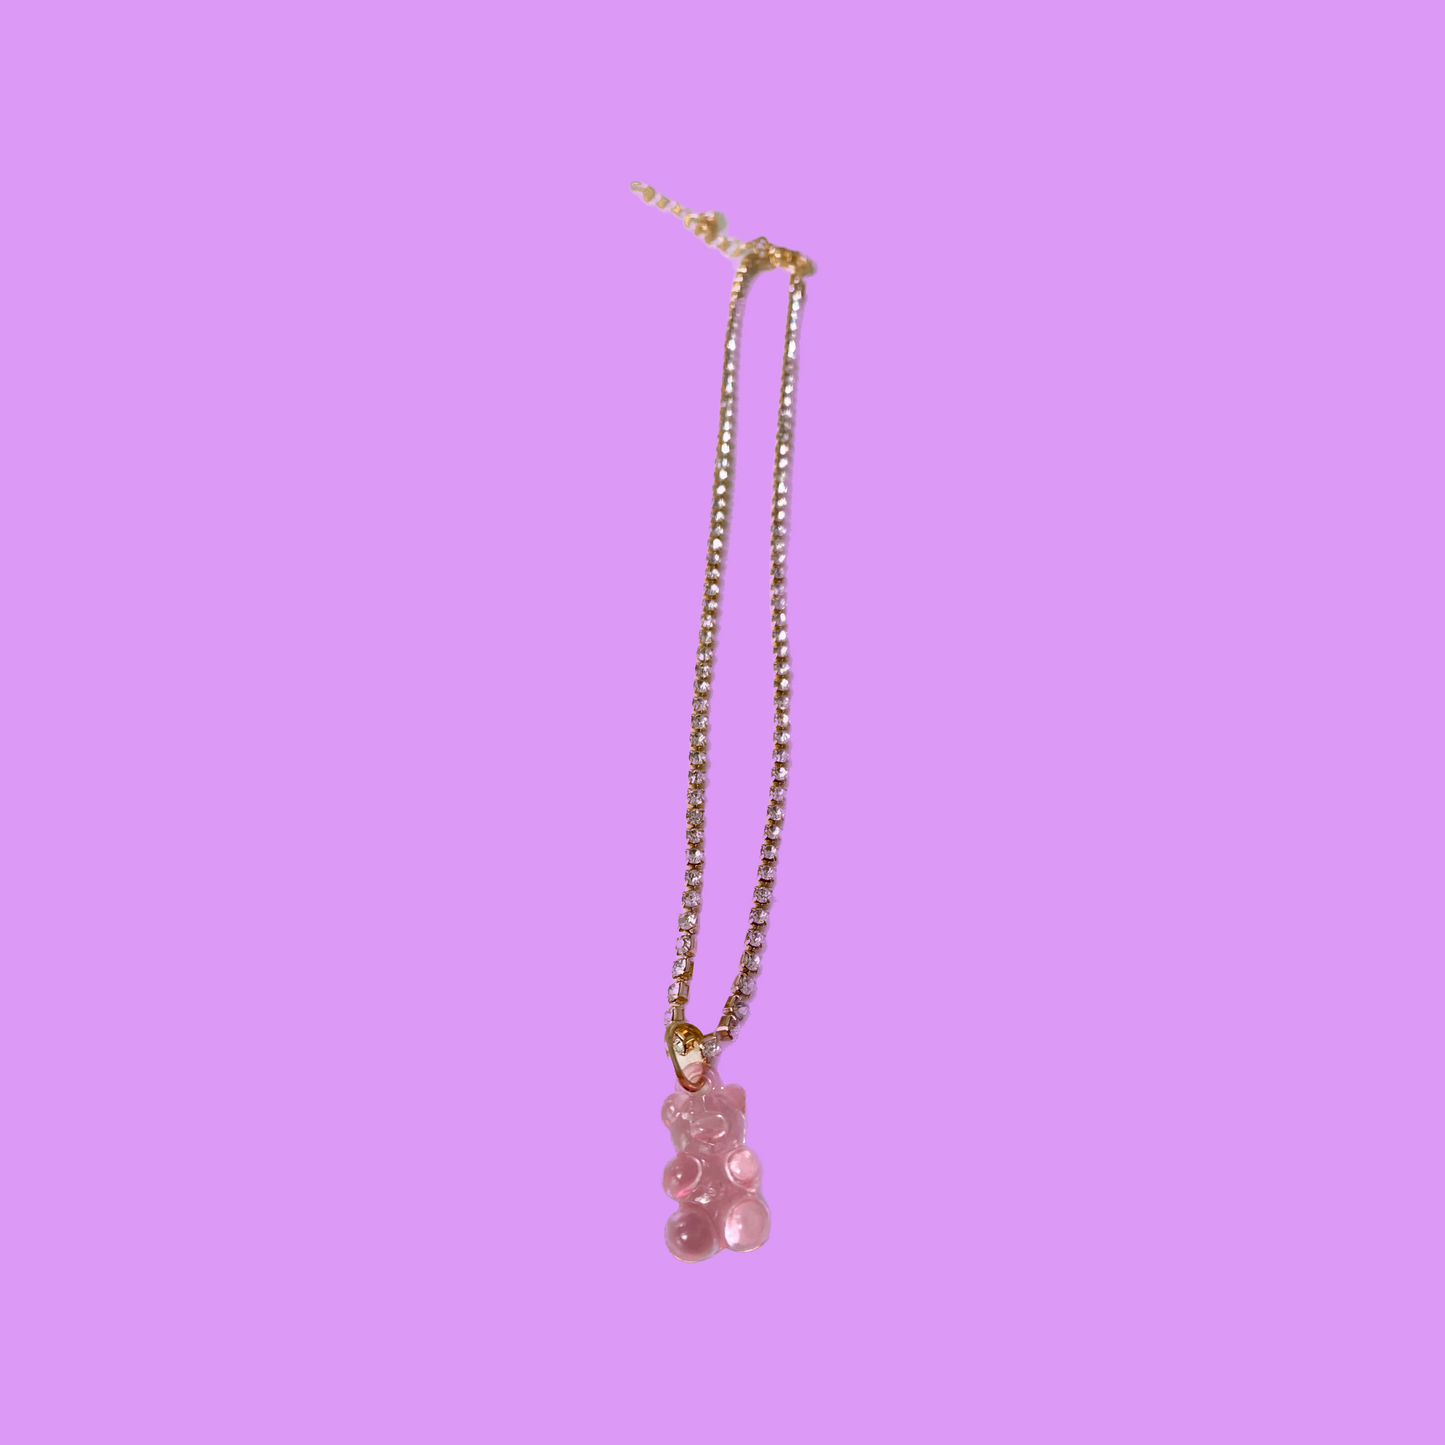 Gummy bear necklace